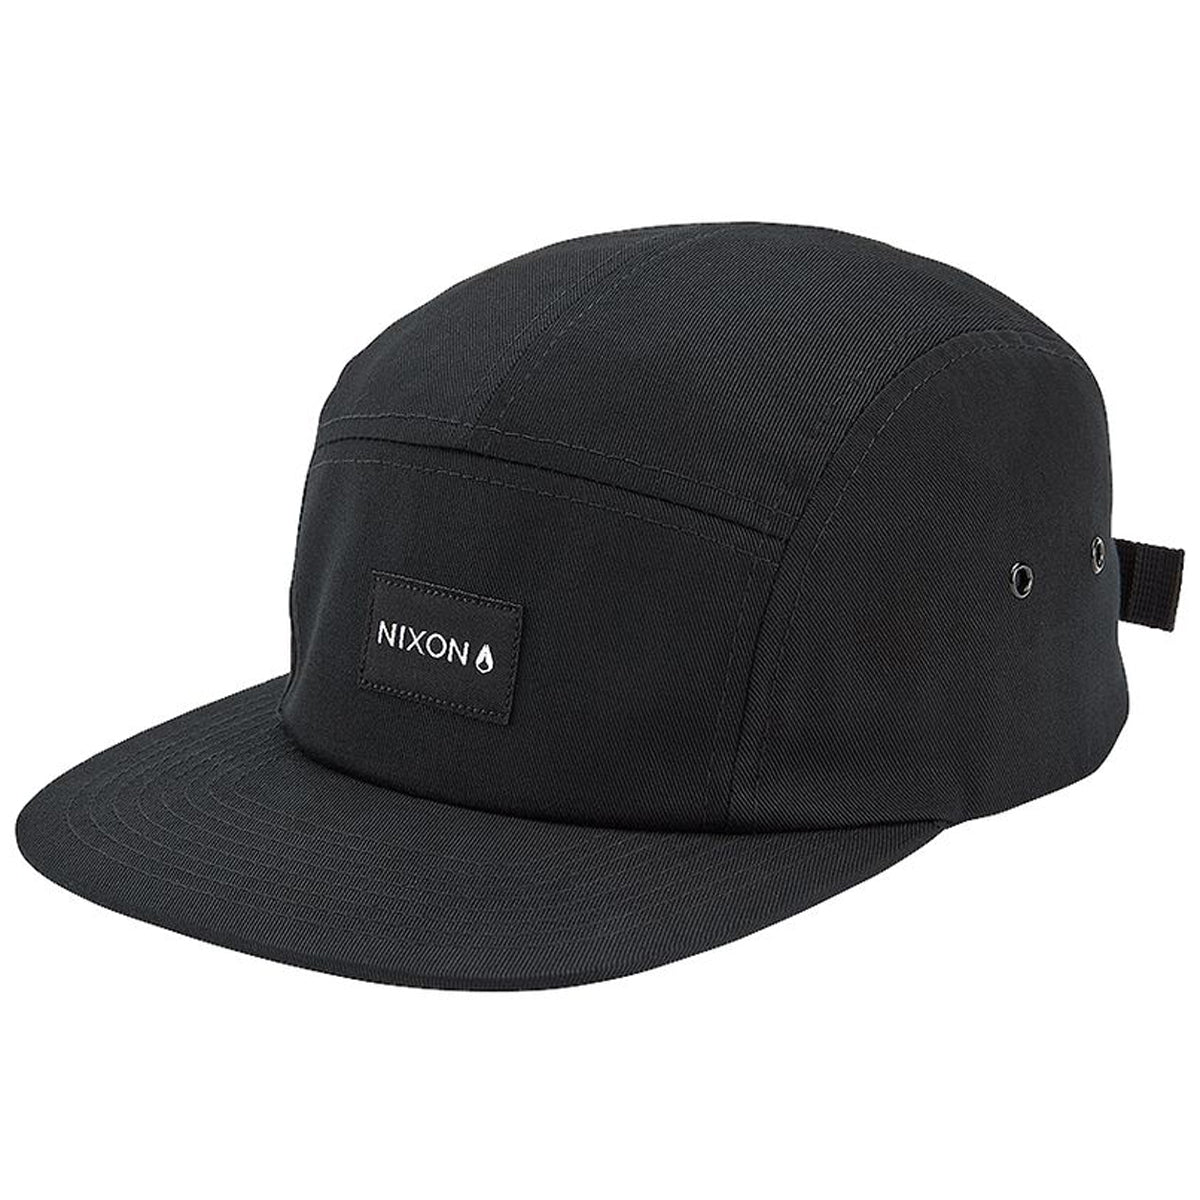 Nixon Mikey Strapback Hat - Black image 1